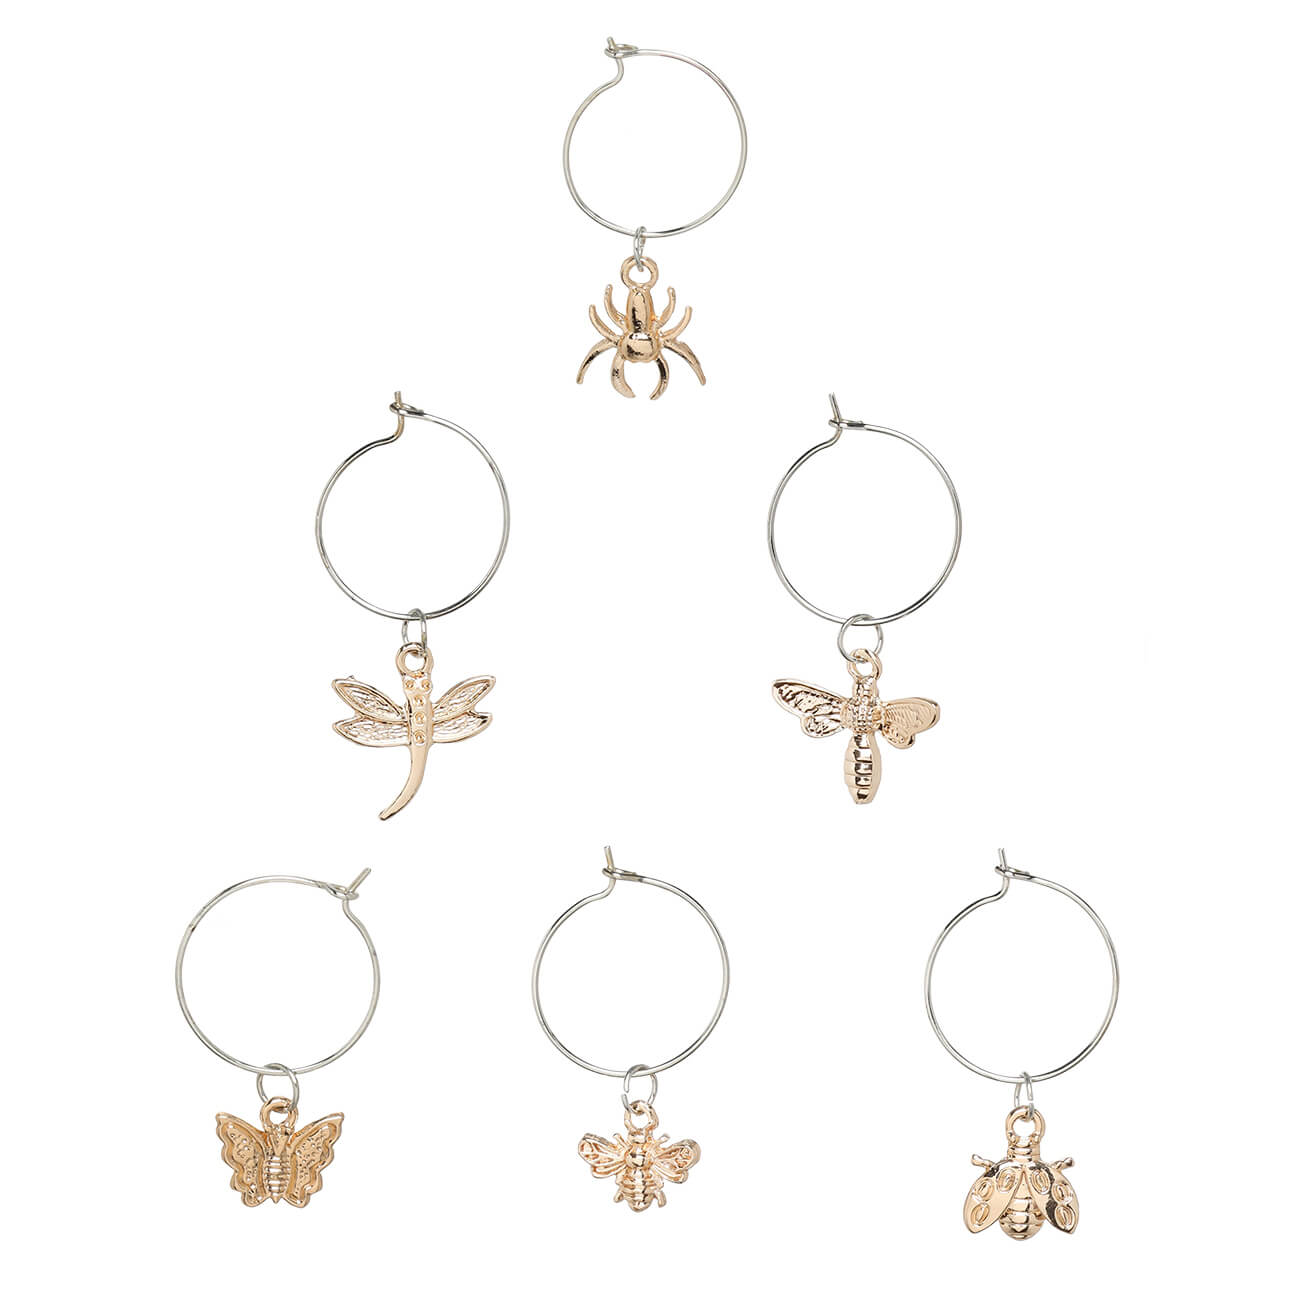 Glass pendant, 6 pcs, metal, Gold, Insects, Bugs изображение № 1